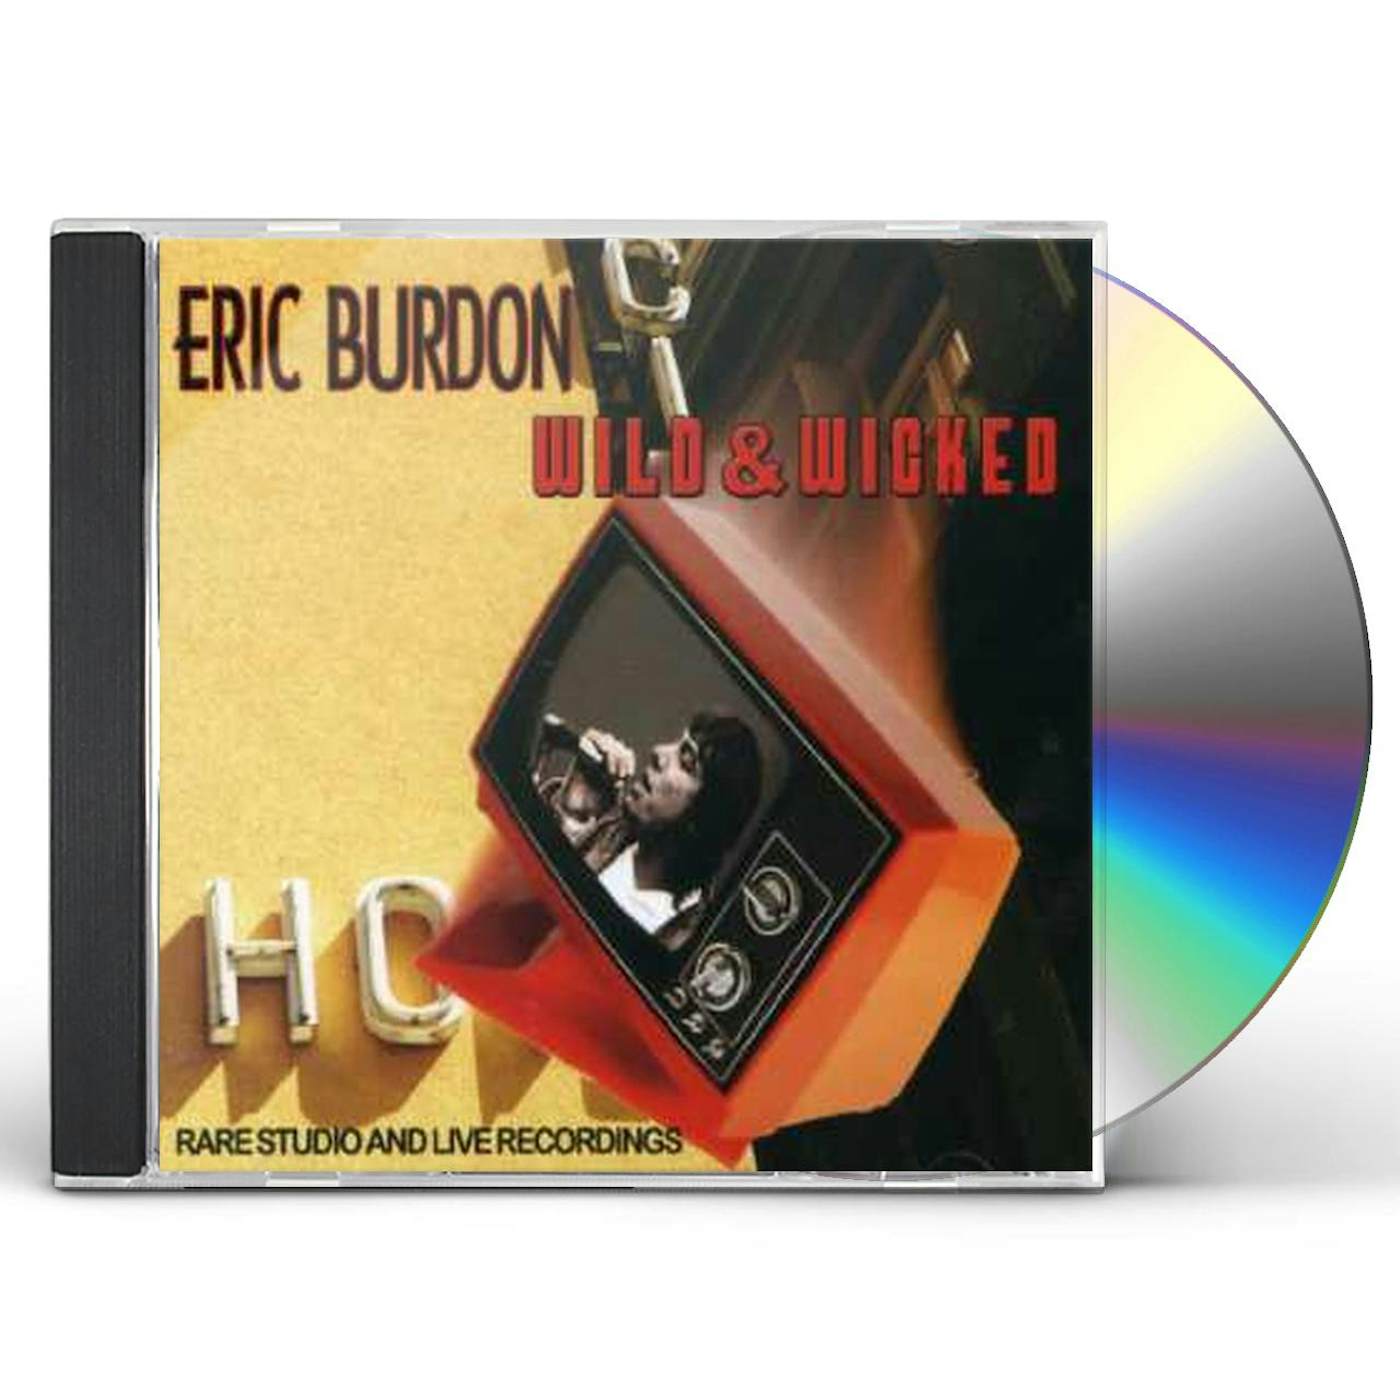 Eric Burdon WILD & WICKED CD